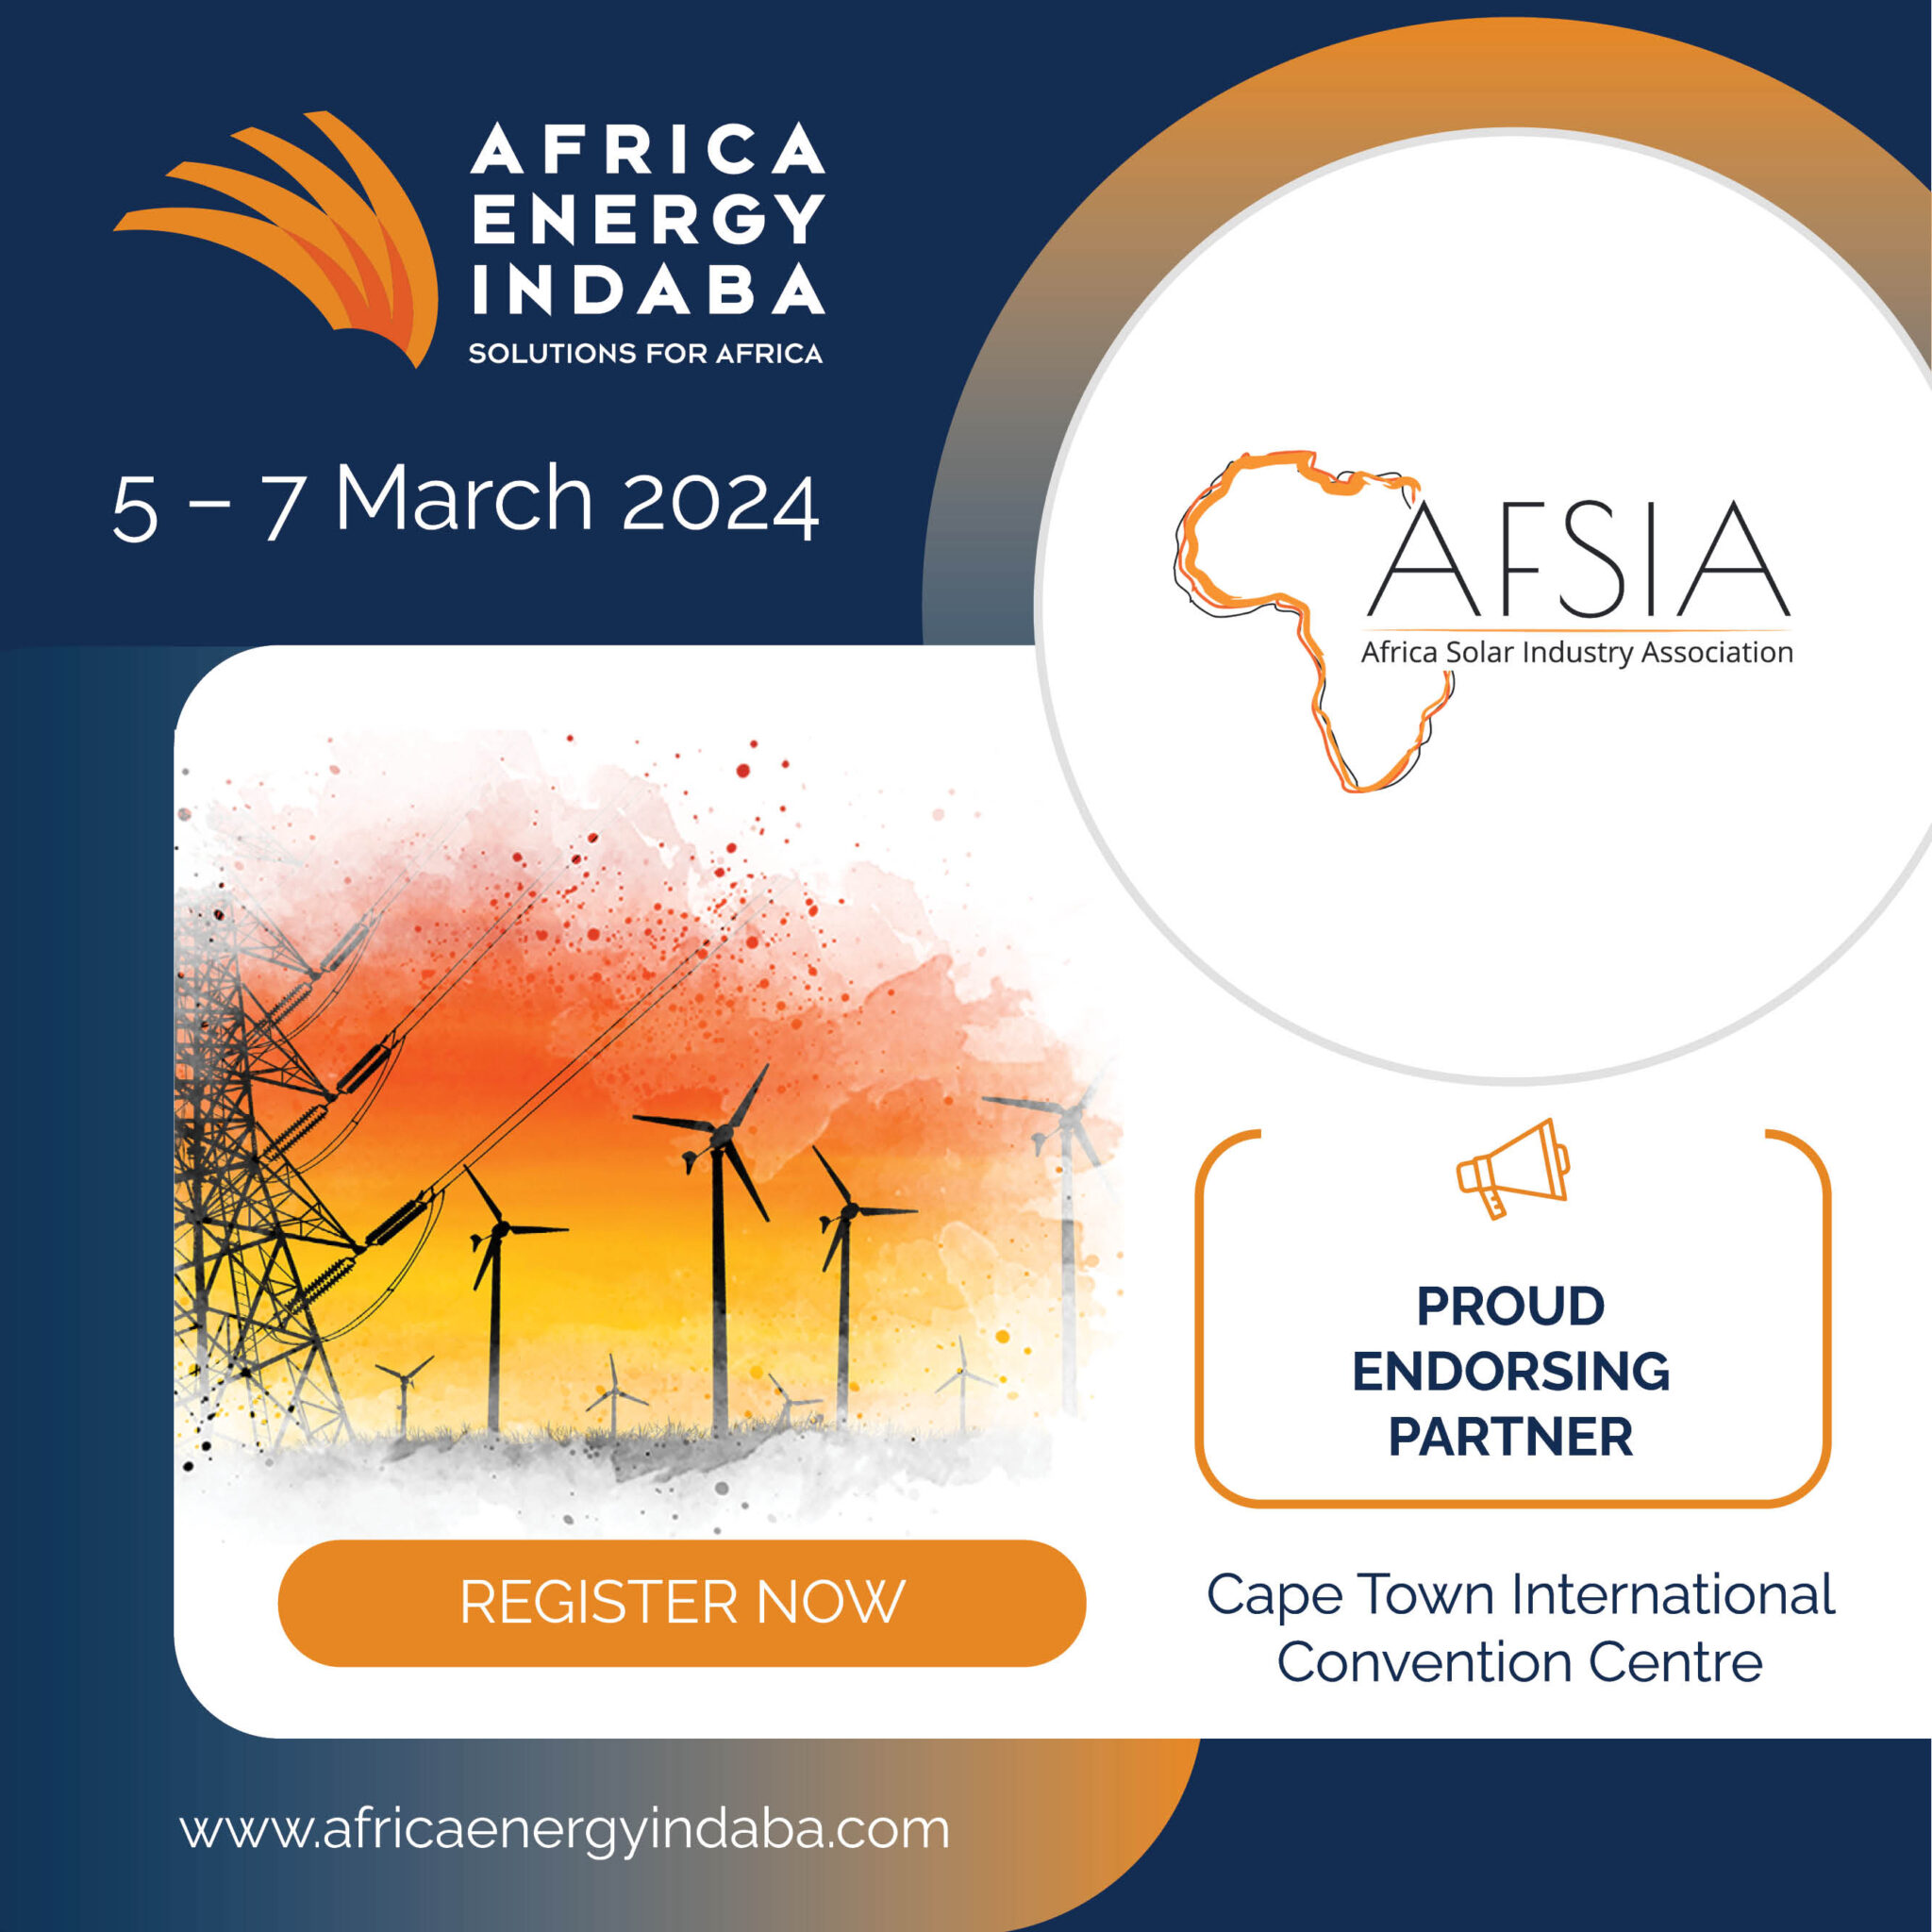 The Africa Energy Indaba 2024 AFSIA